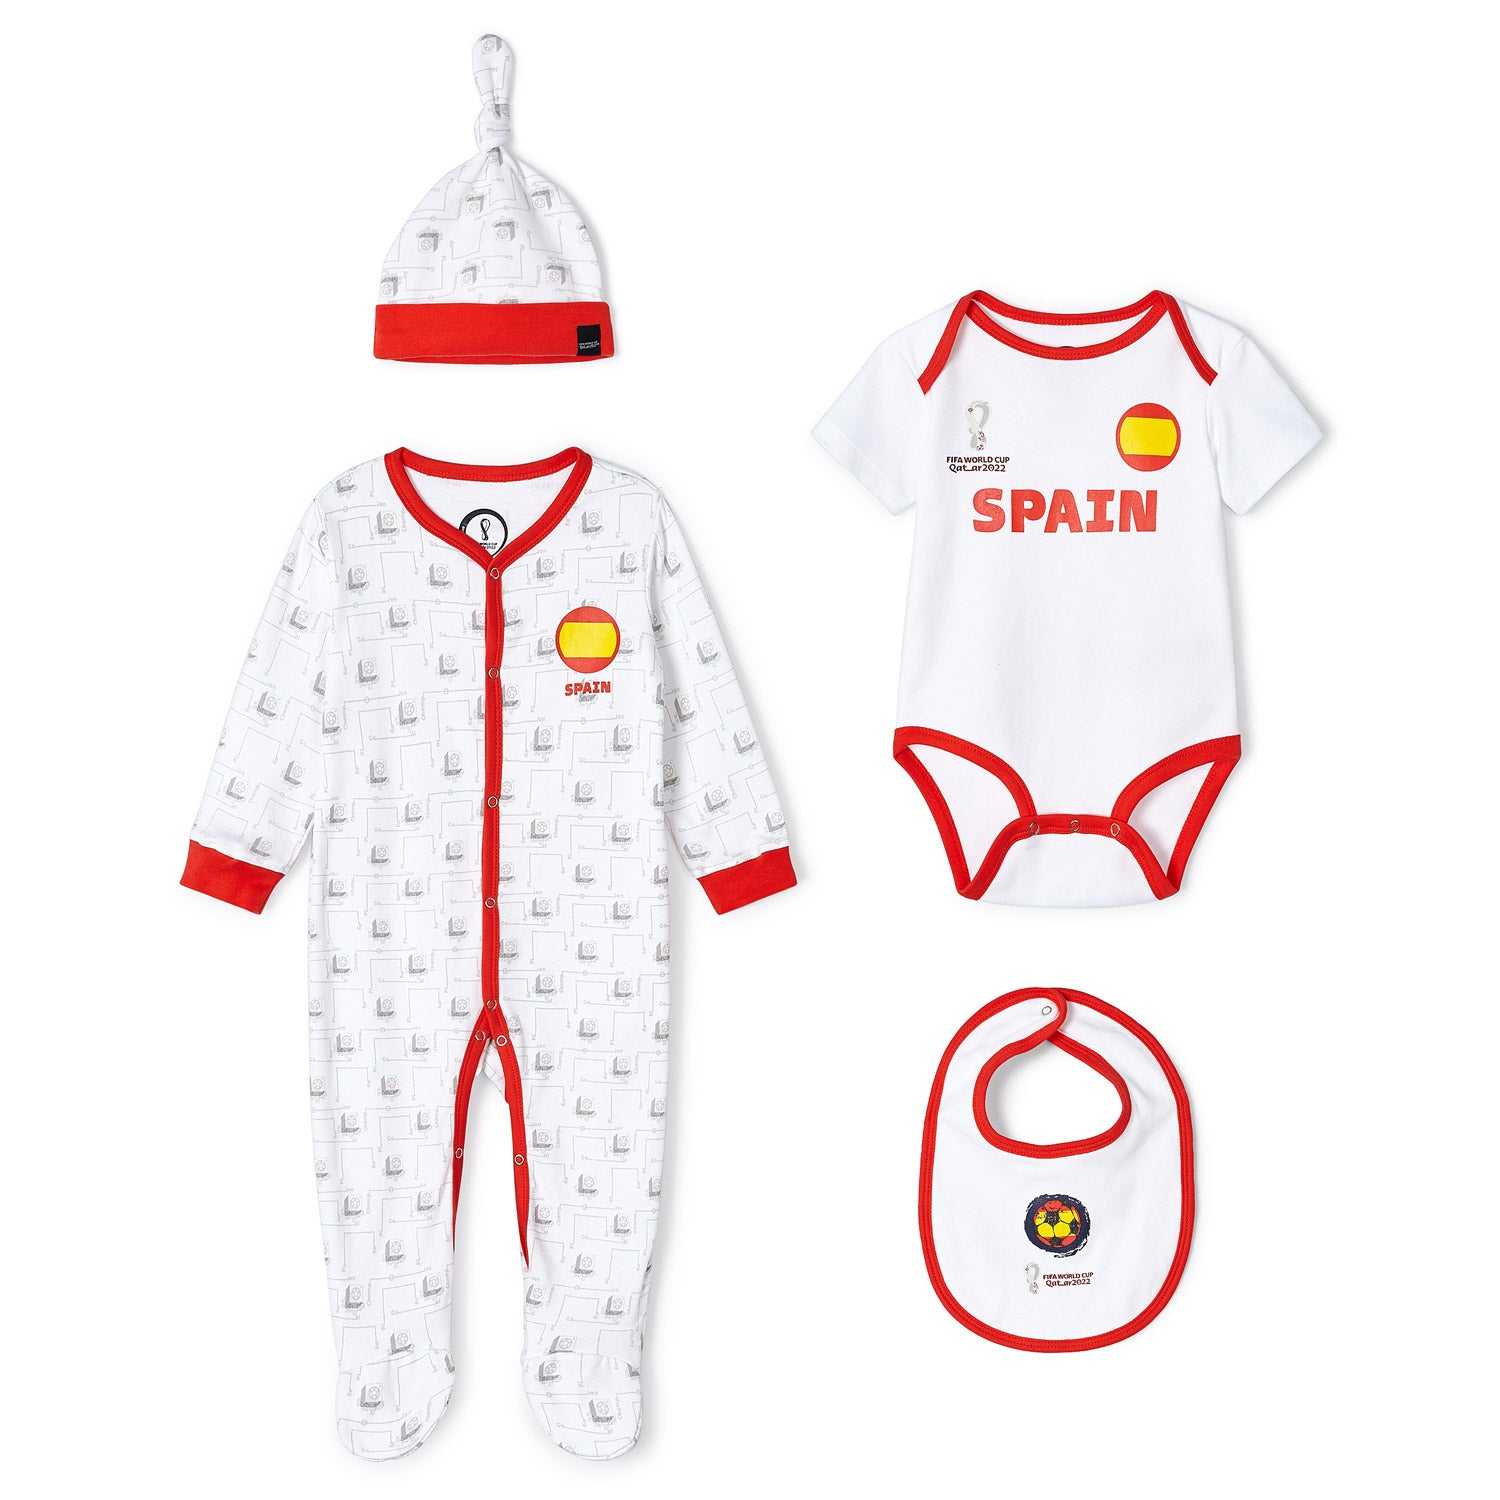 2022 World Cup Spain White Romper - Infant/Toddler